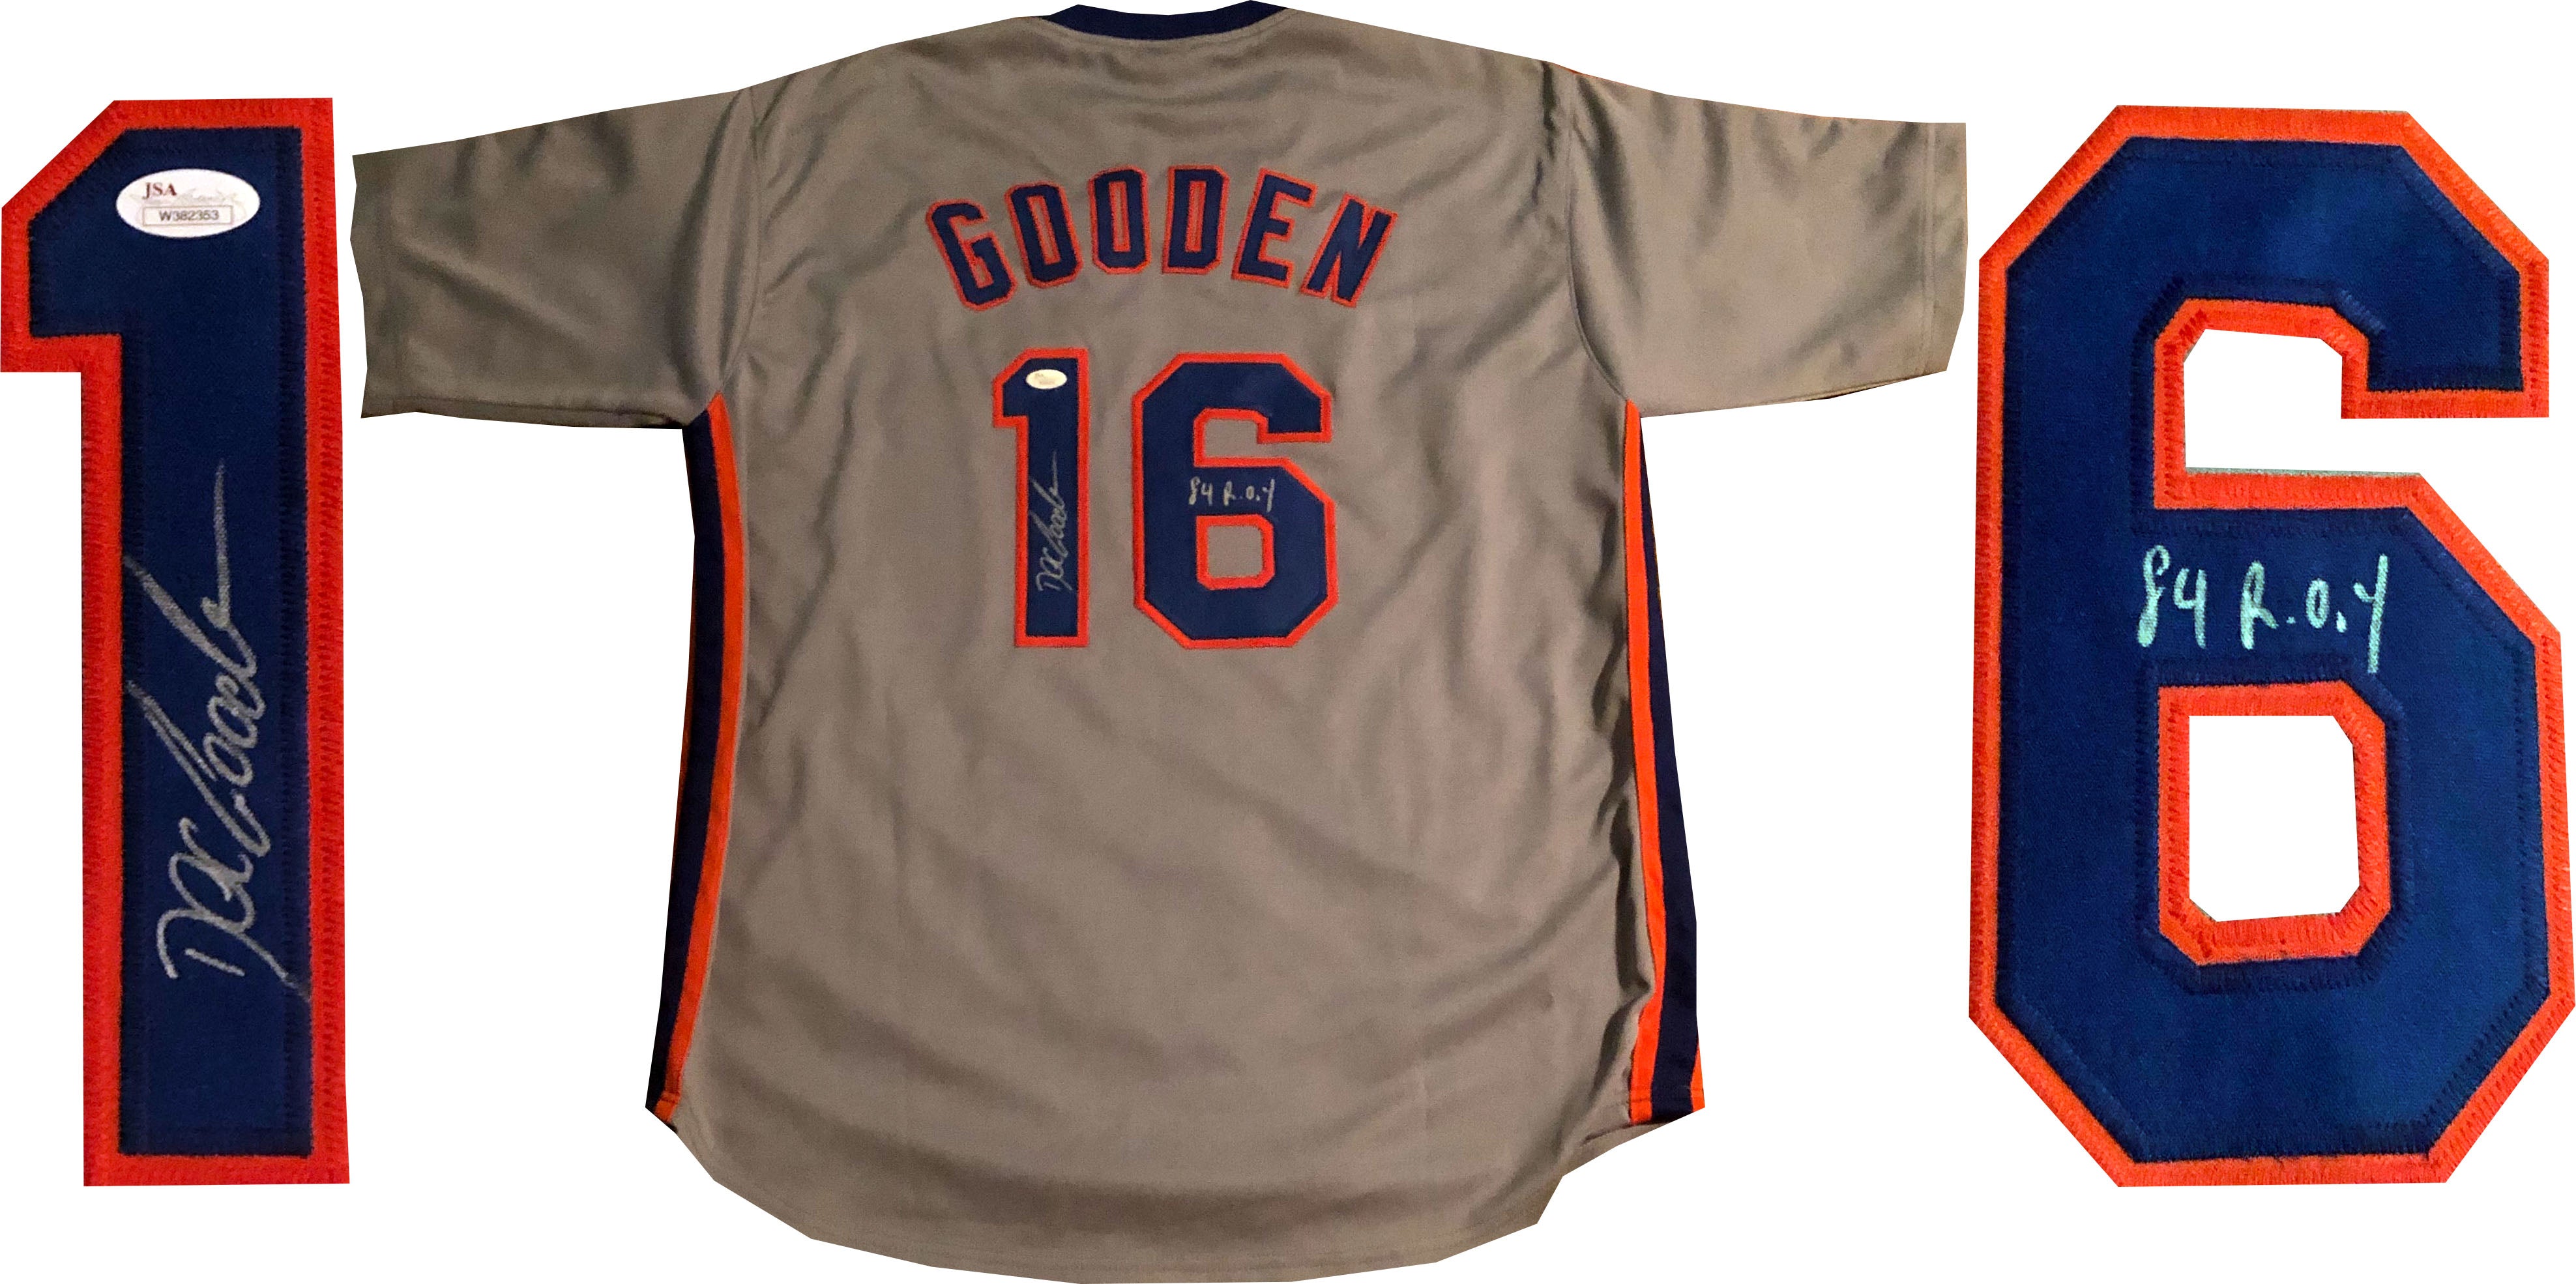 Dwight Gooden 84 ROY Autographed New York Mets Jersey (JSA